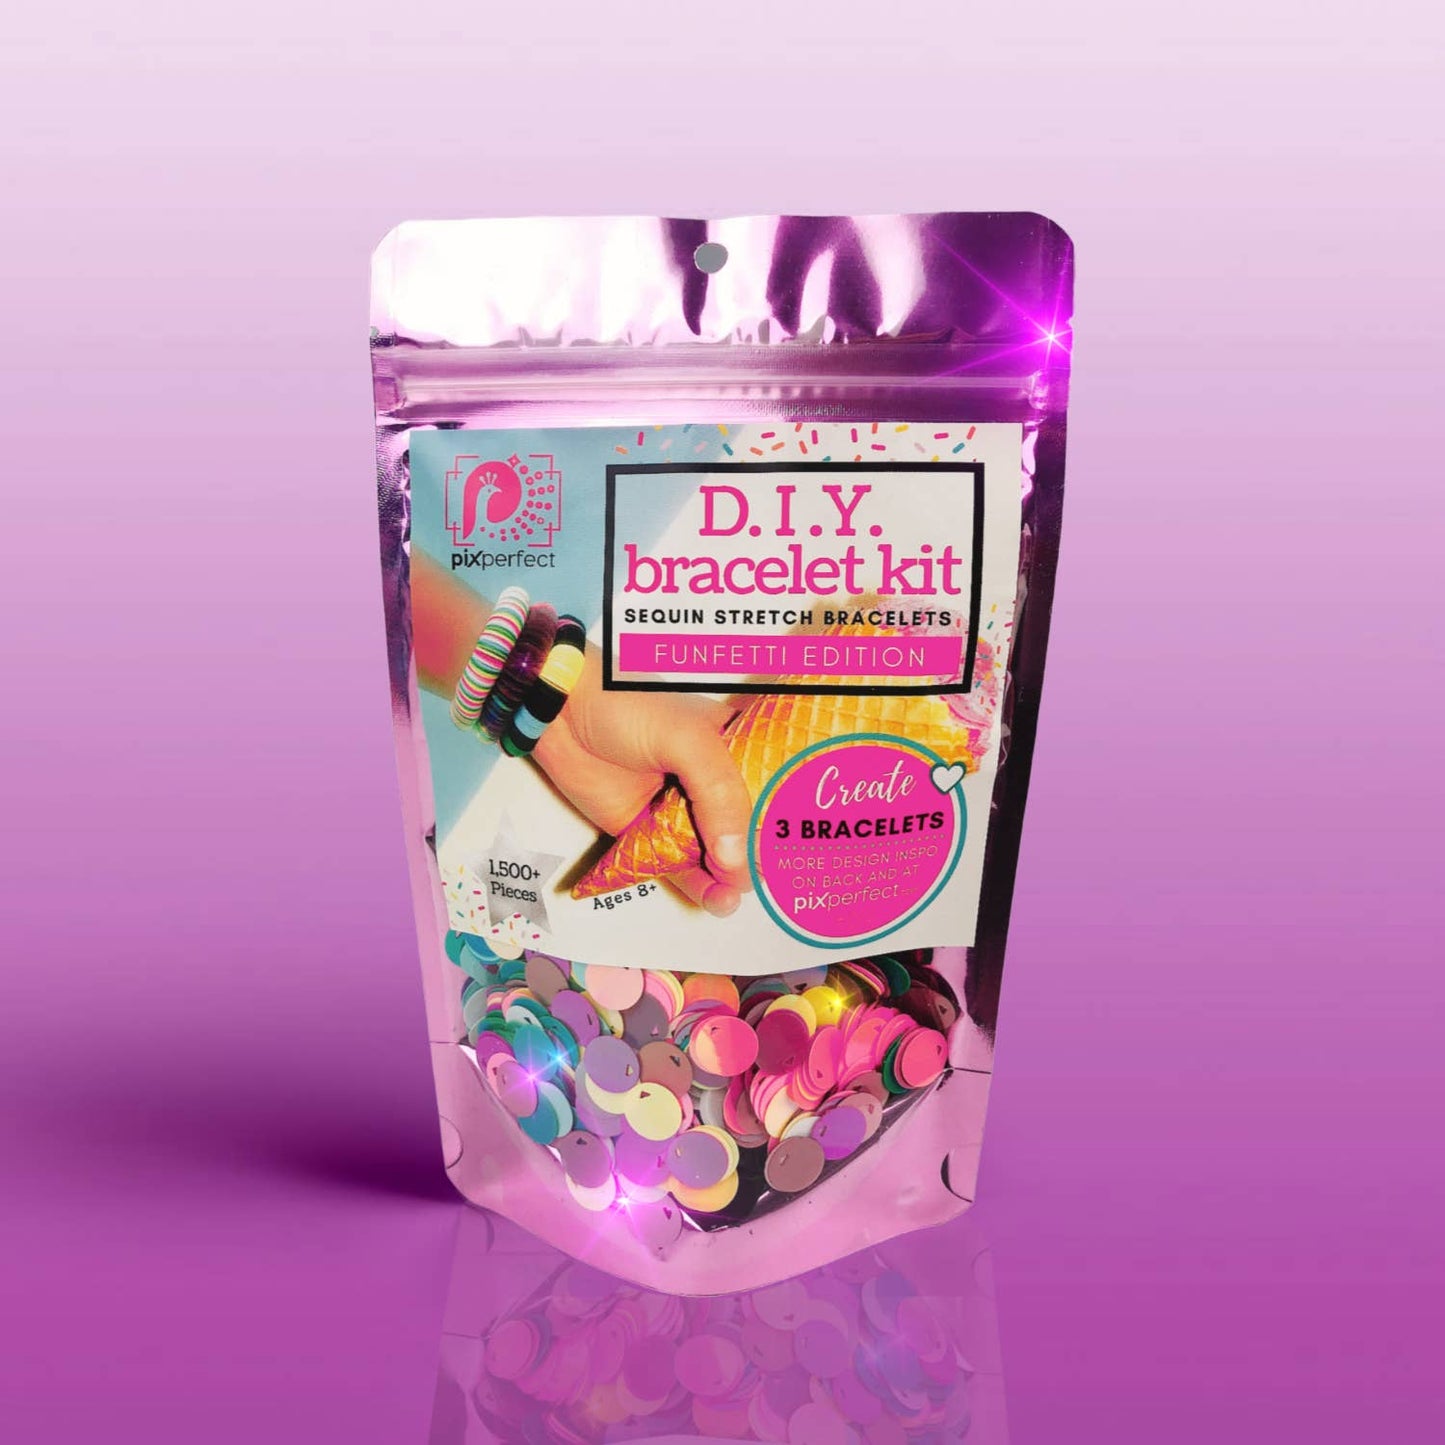 Pix Perfect - D.I.Y. Bracelet Kit - Funfetti Edition